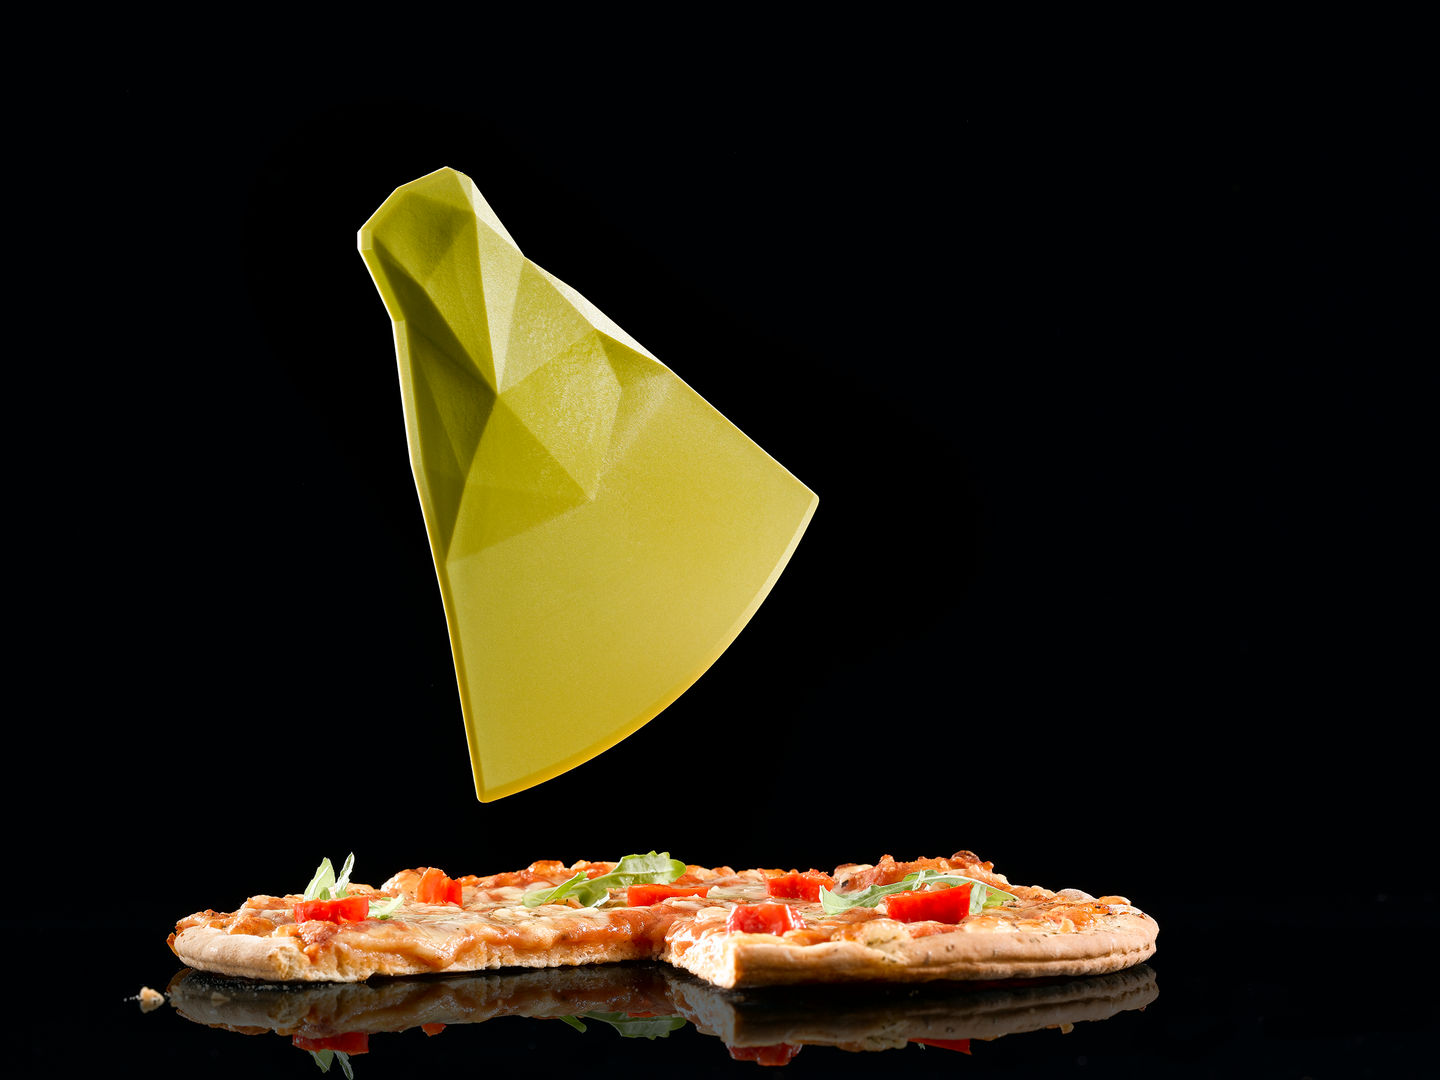 Kant decoupe-spatule a Pizza, ase product - serge atallah ase product - serge atallah 에클레틱 주방 주방 용품